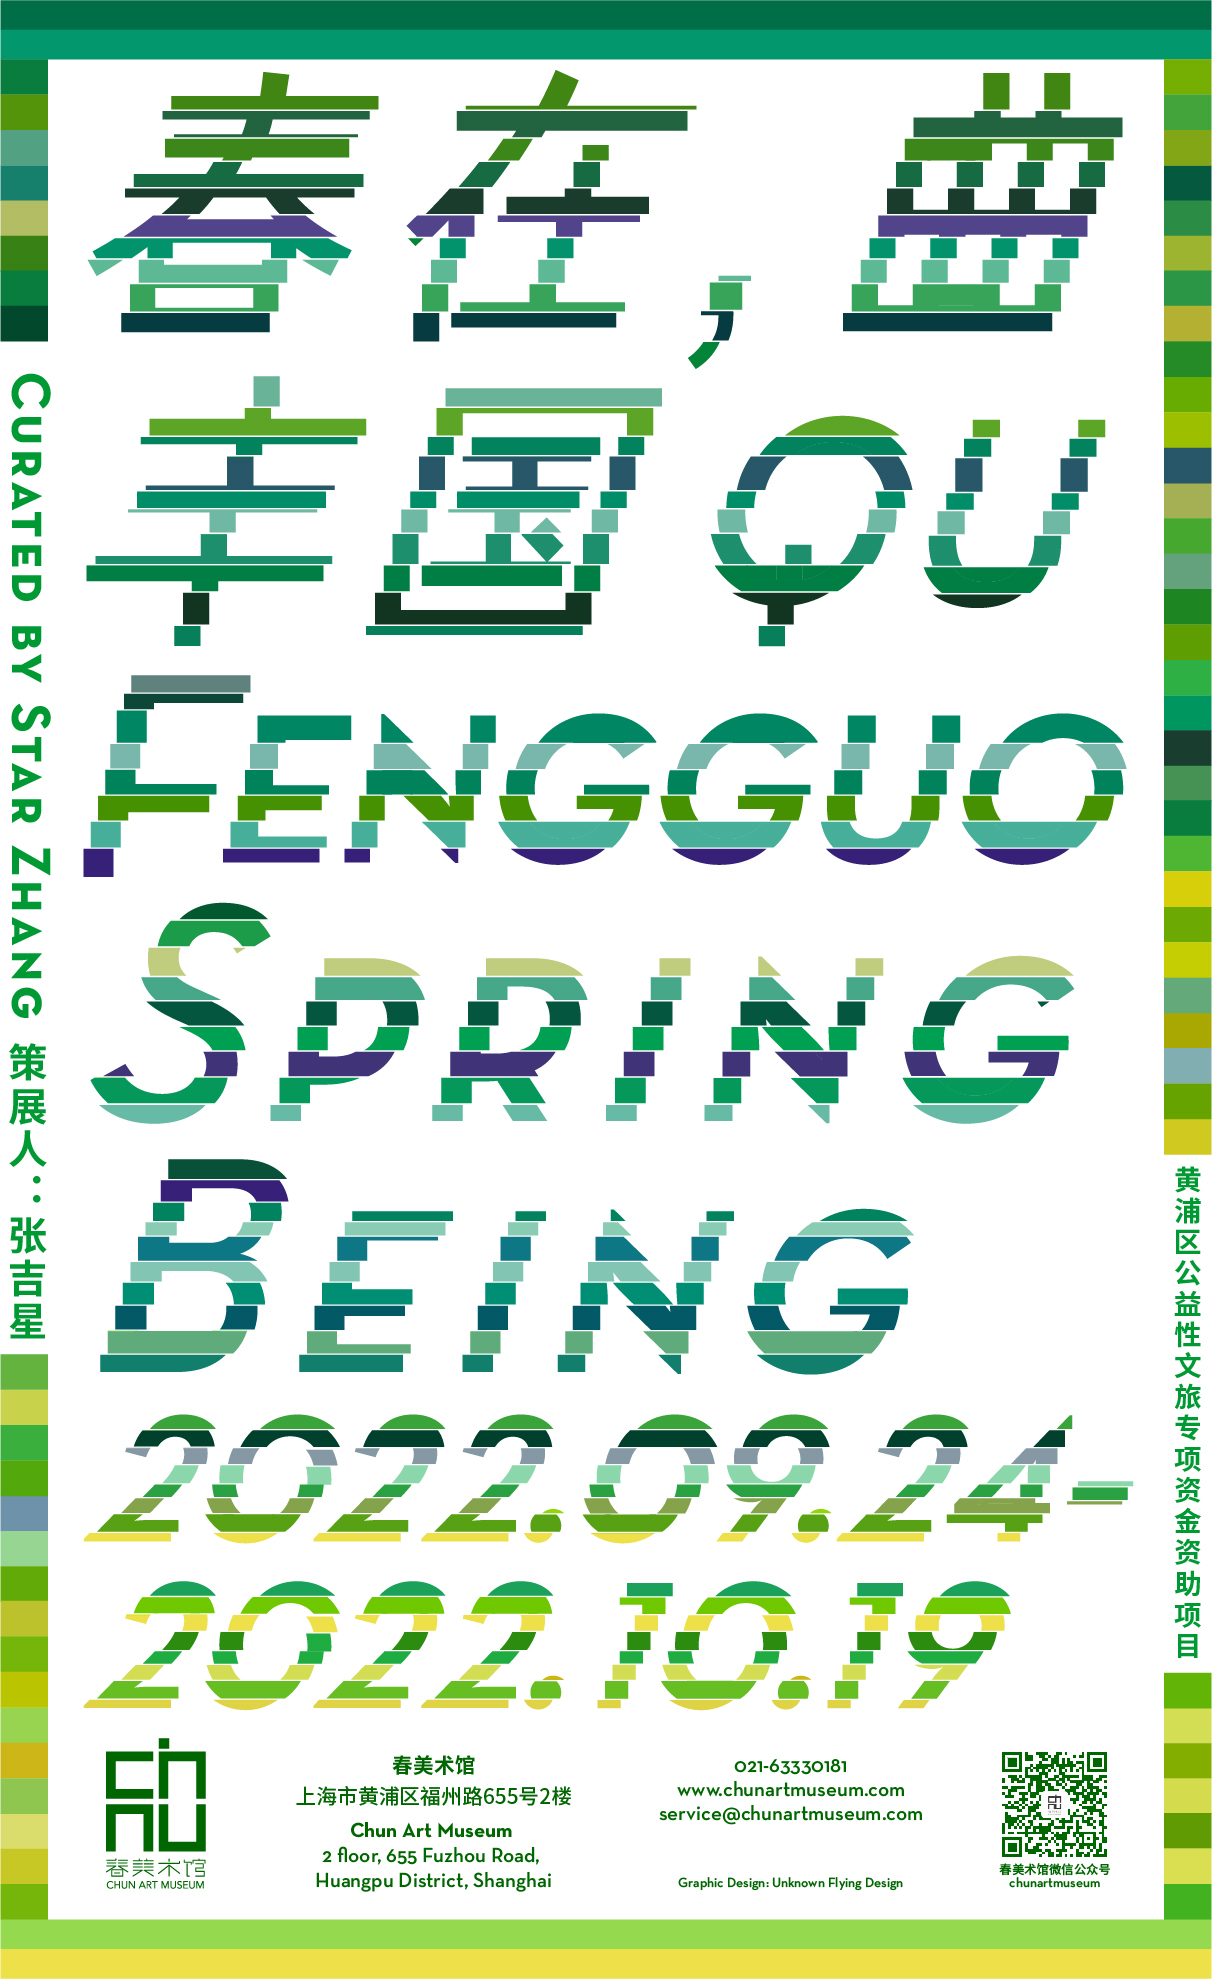 QU Fengguo 曲丰国，Spring Being 春在, 2022